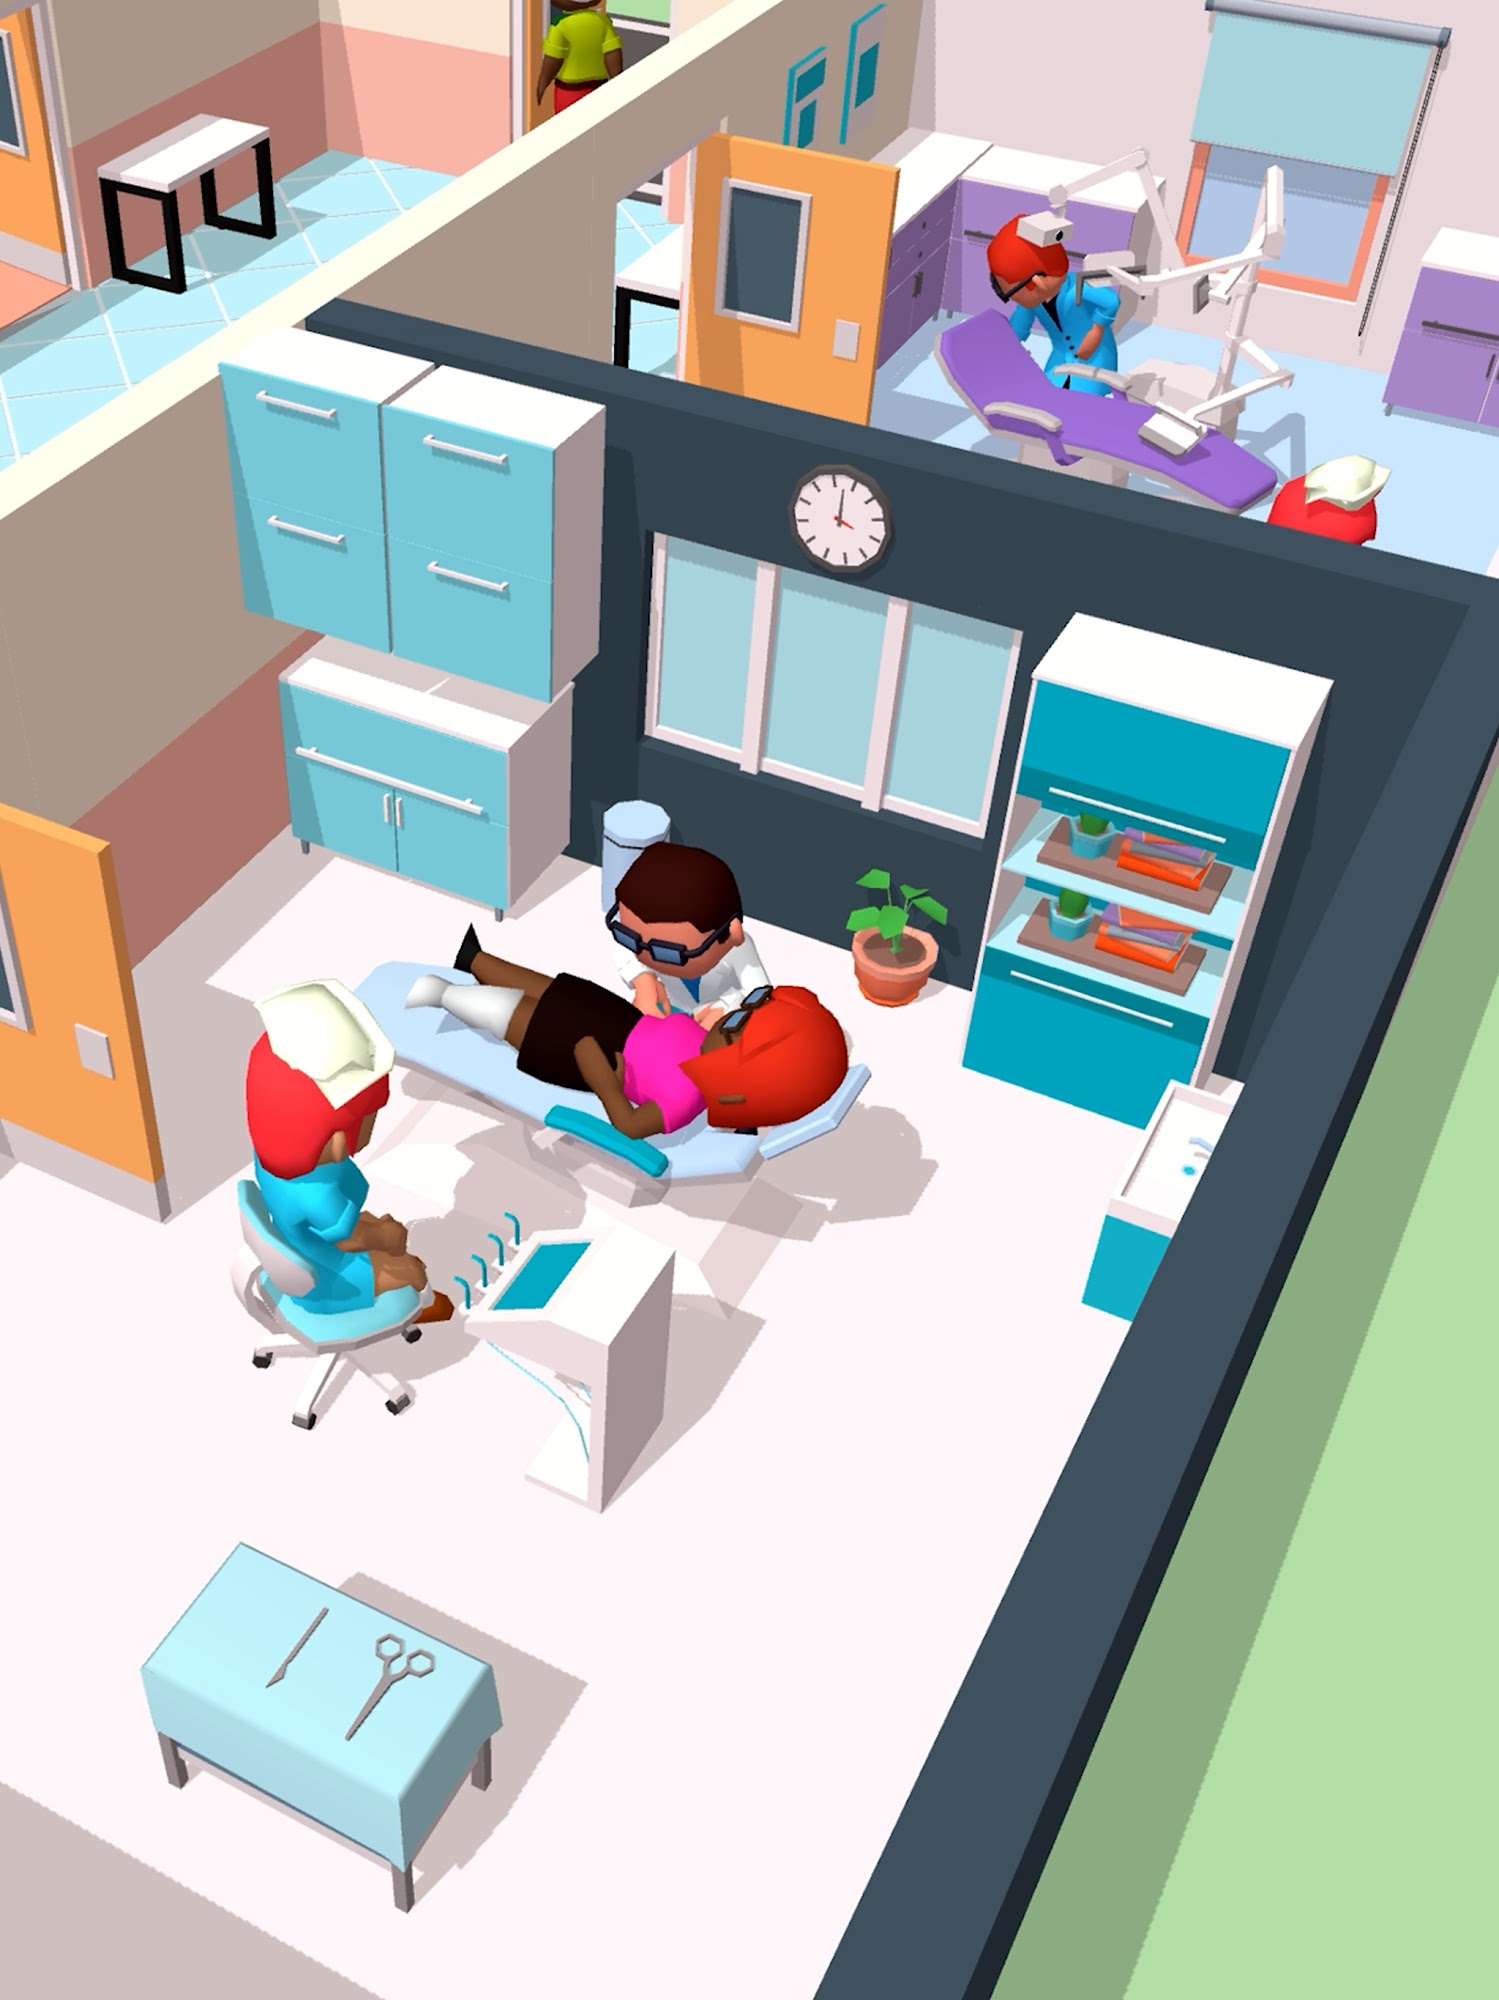 Hospital Rush - Android game screenshots.